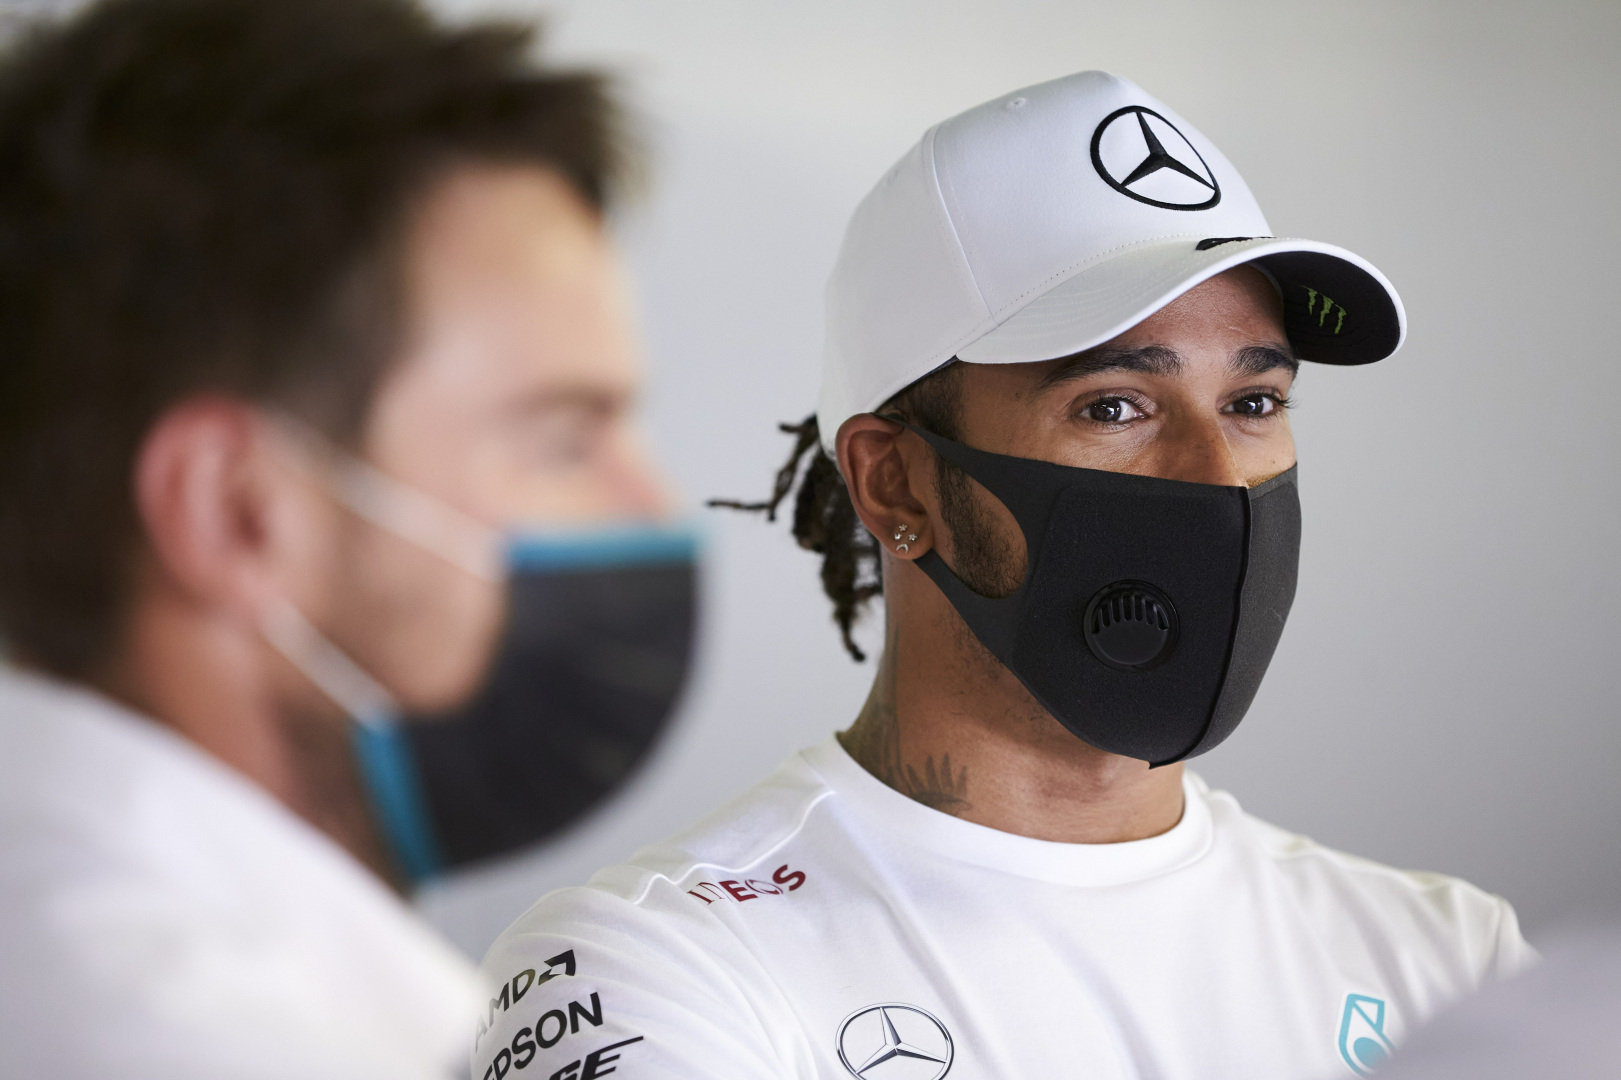 L. Hamiltonas ketina išbandyti savo komandos automobilį